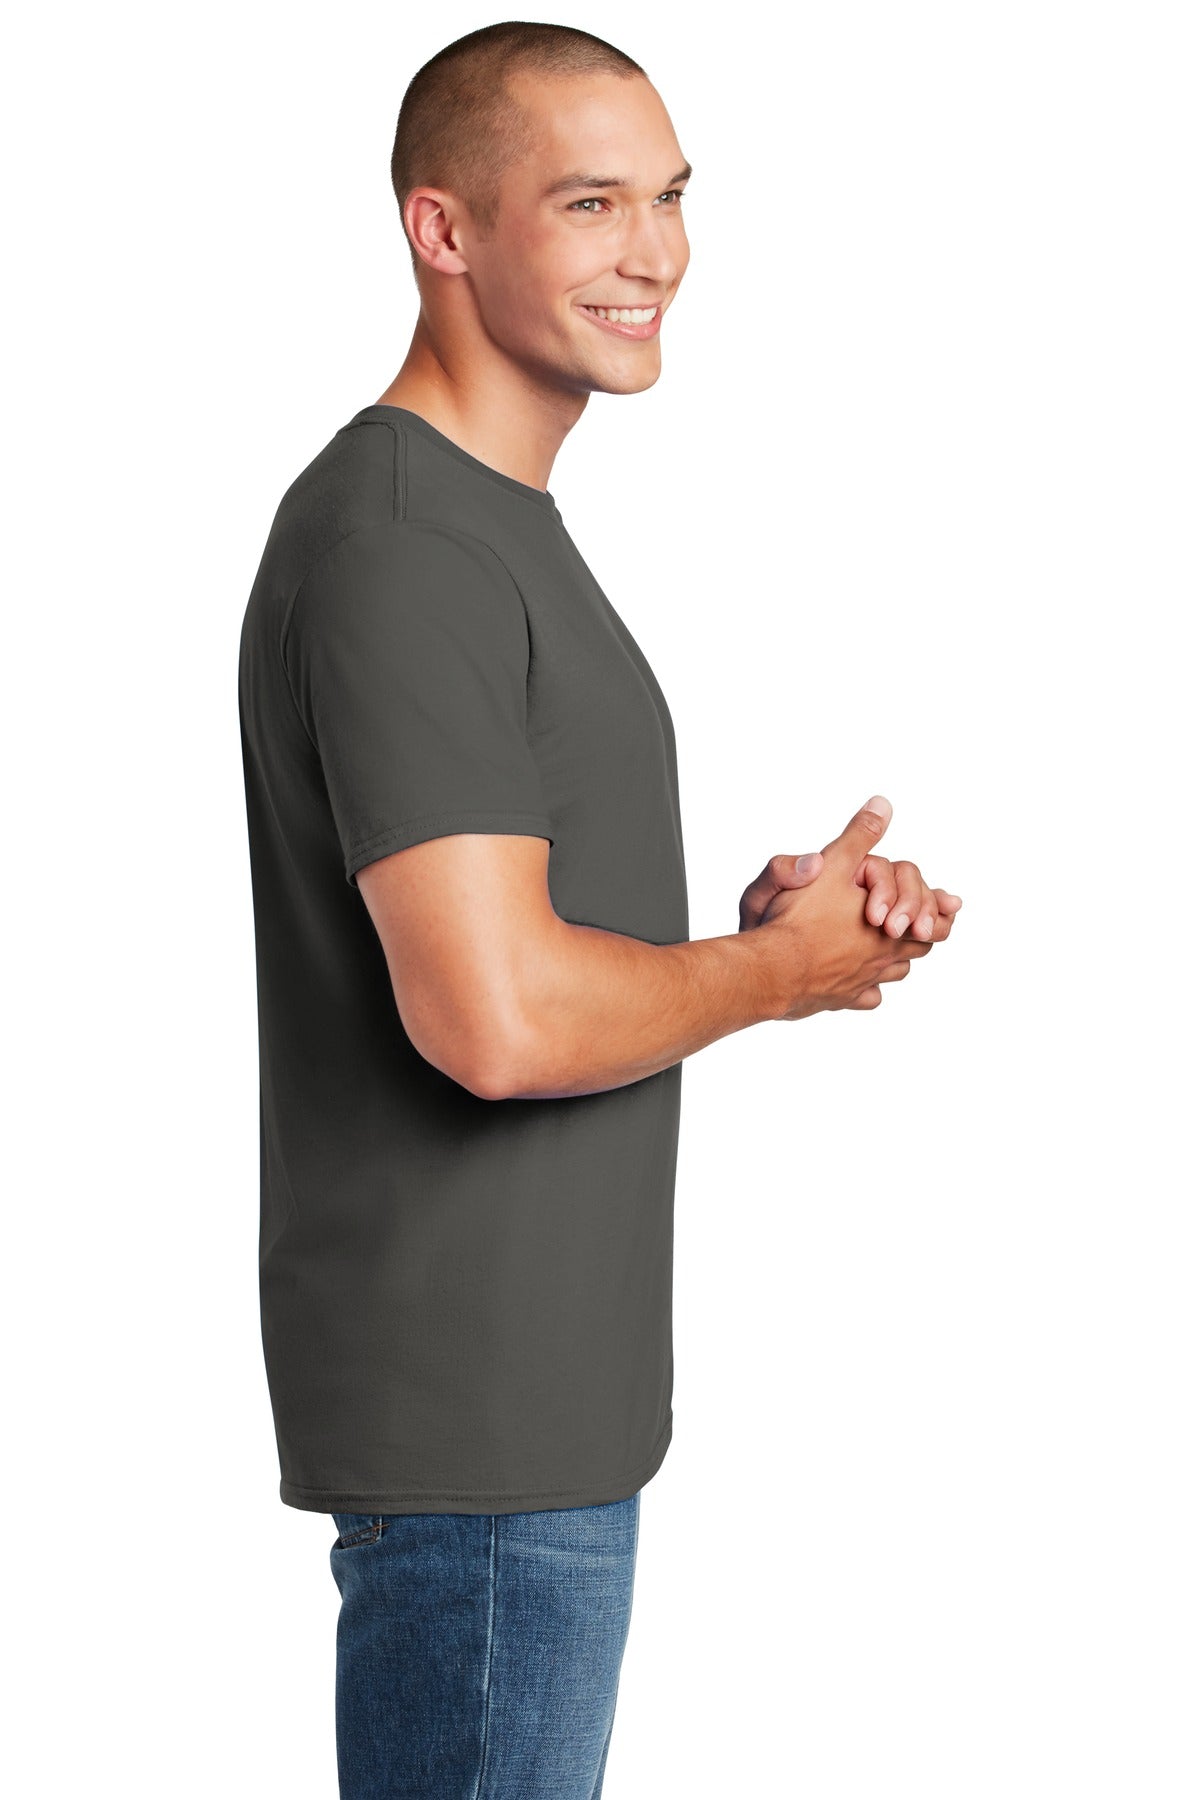 Gildan Softstyle® T-Shirt. 64000 [Charcoal] - DFW Impression